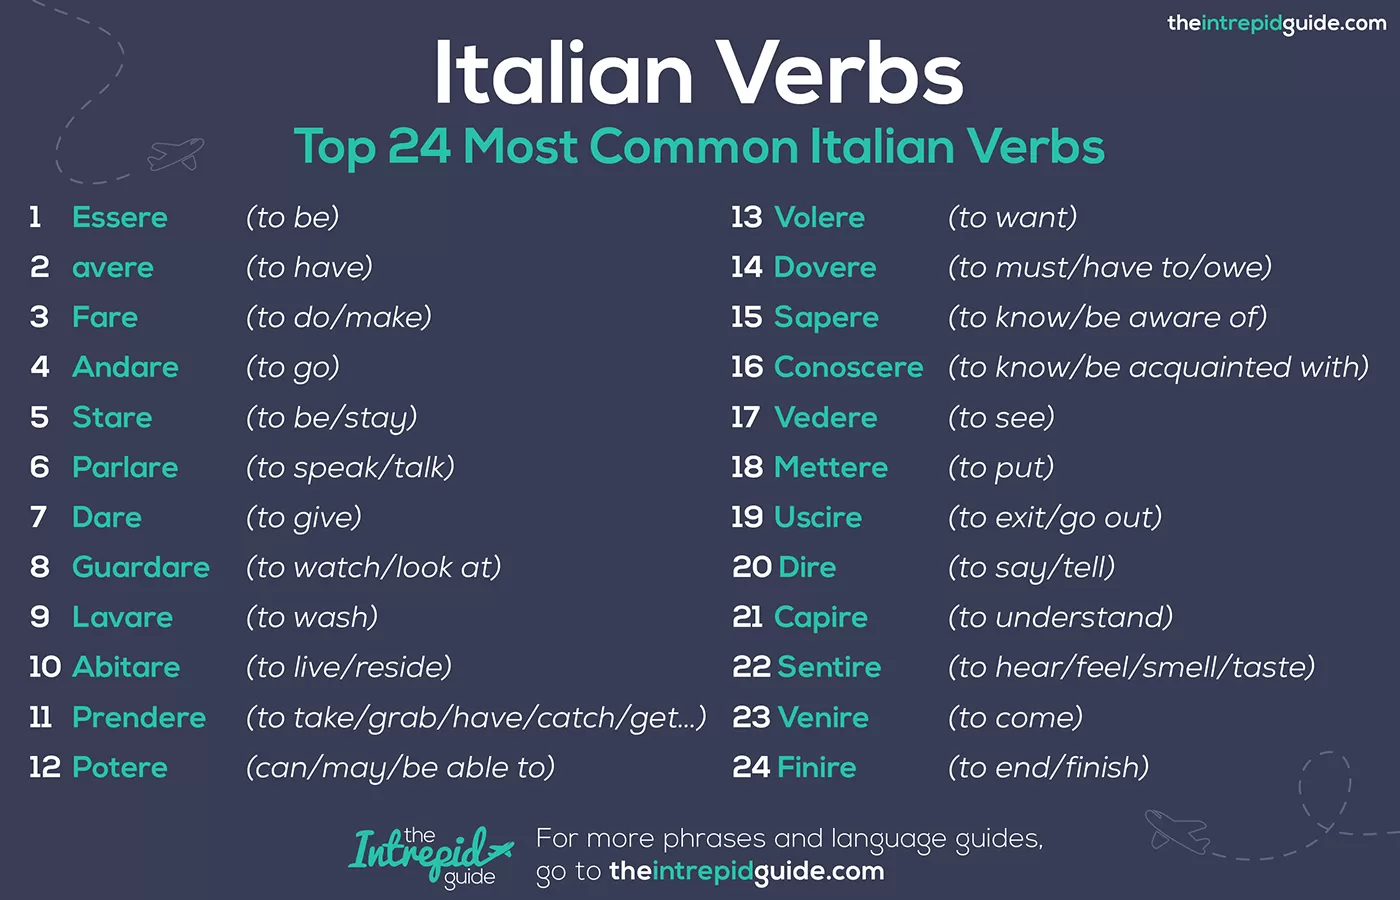 Top 24 Most Common Italian Verbs List